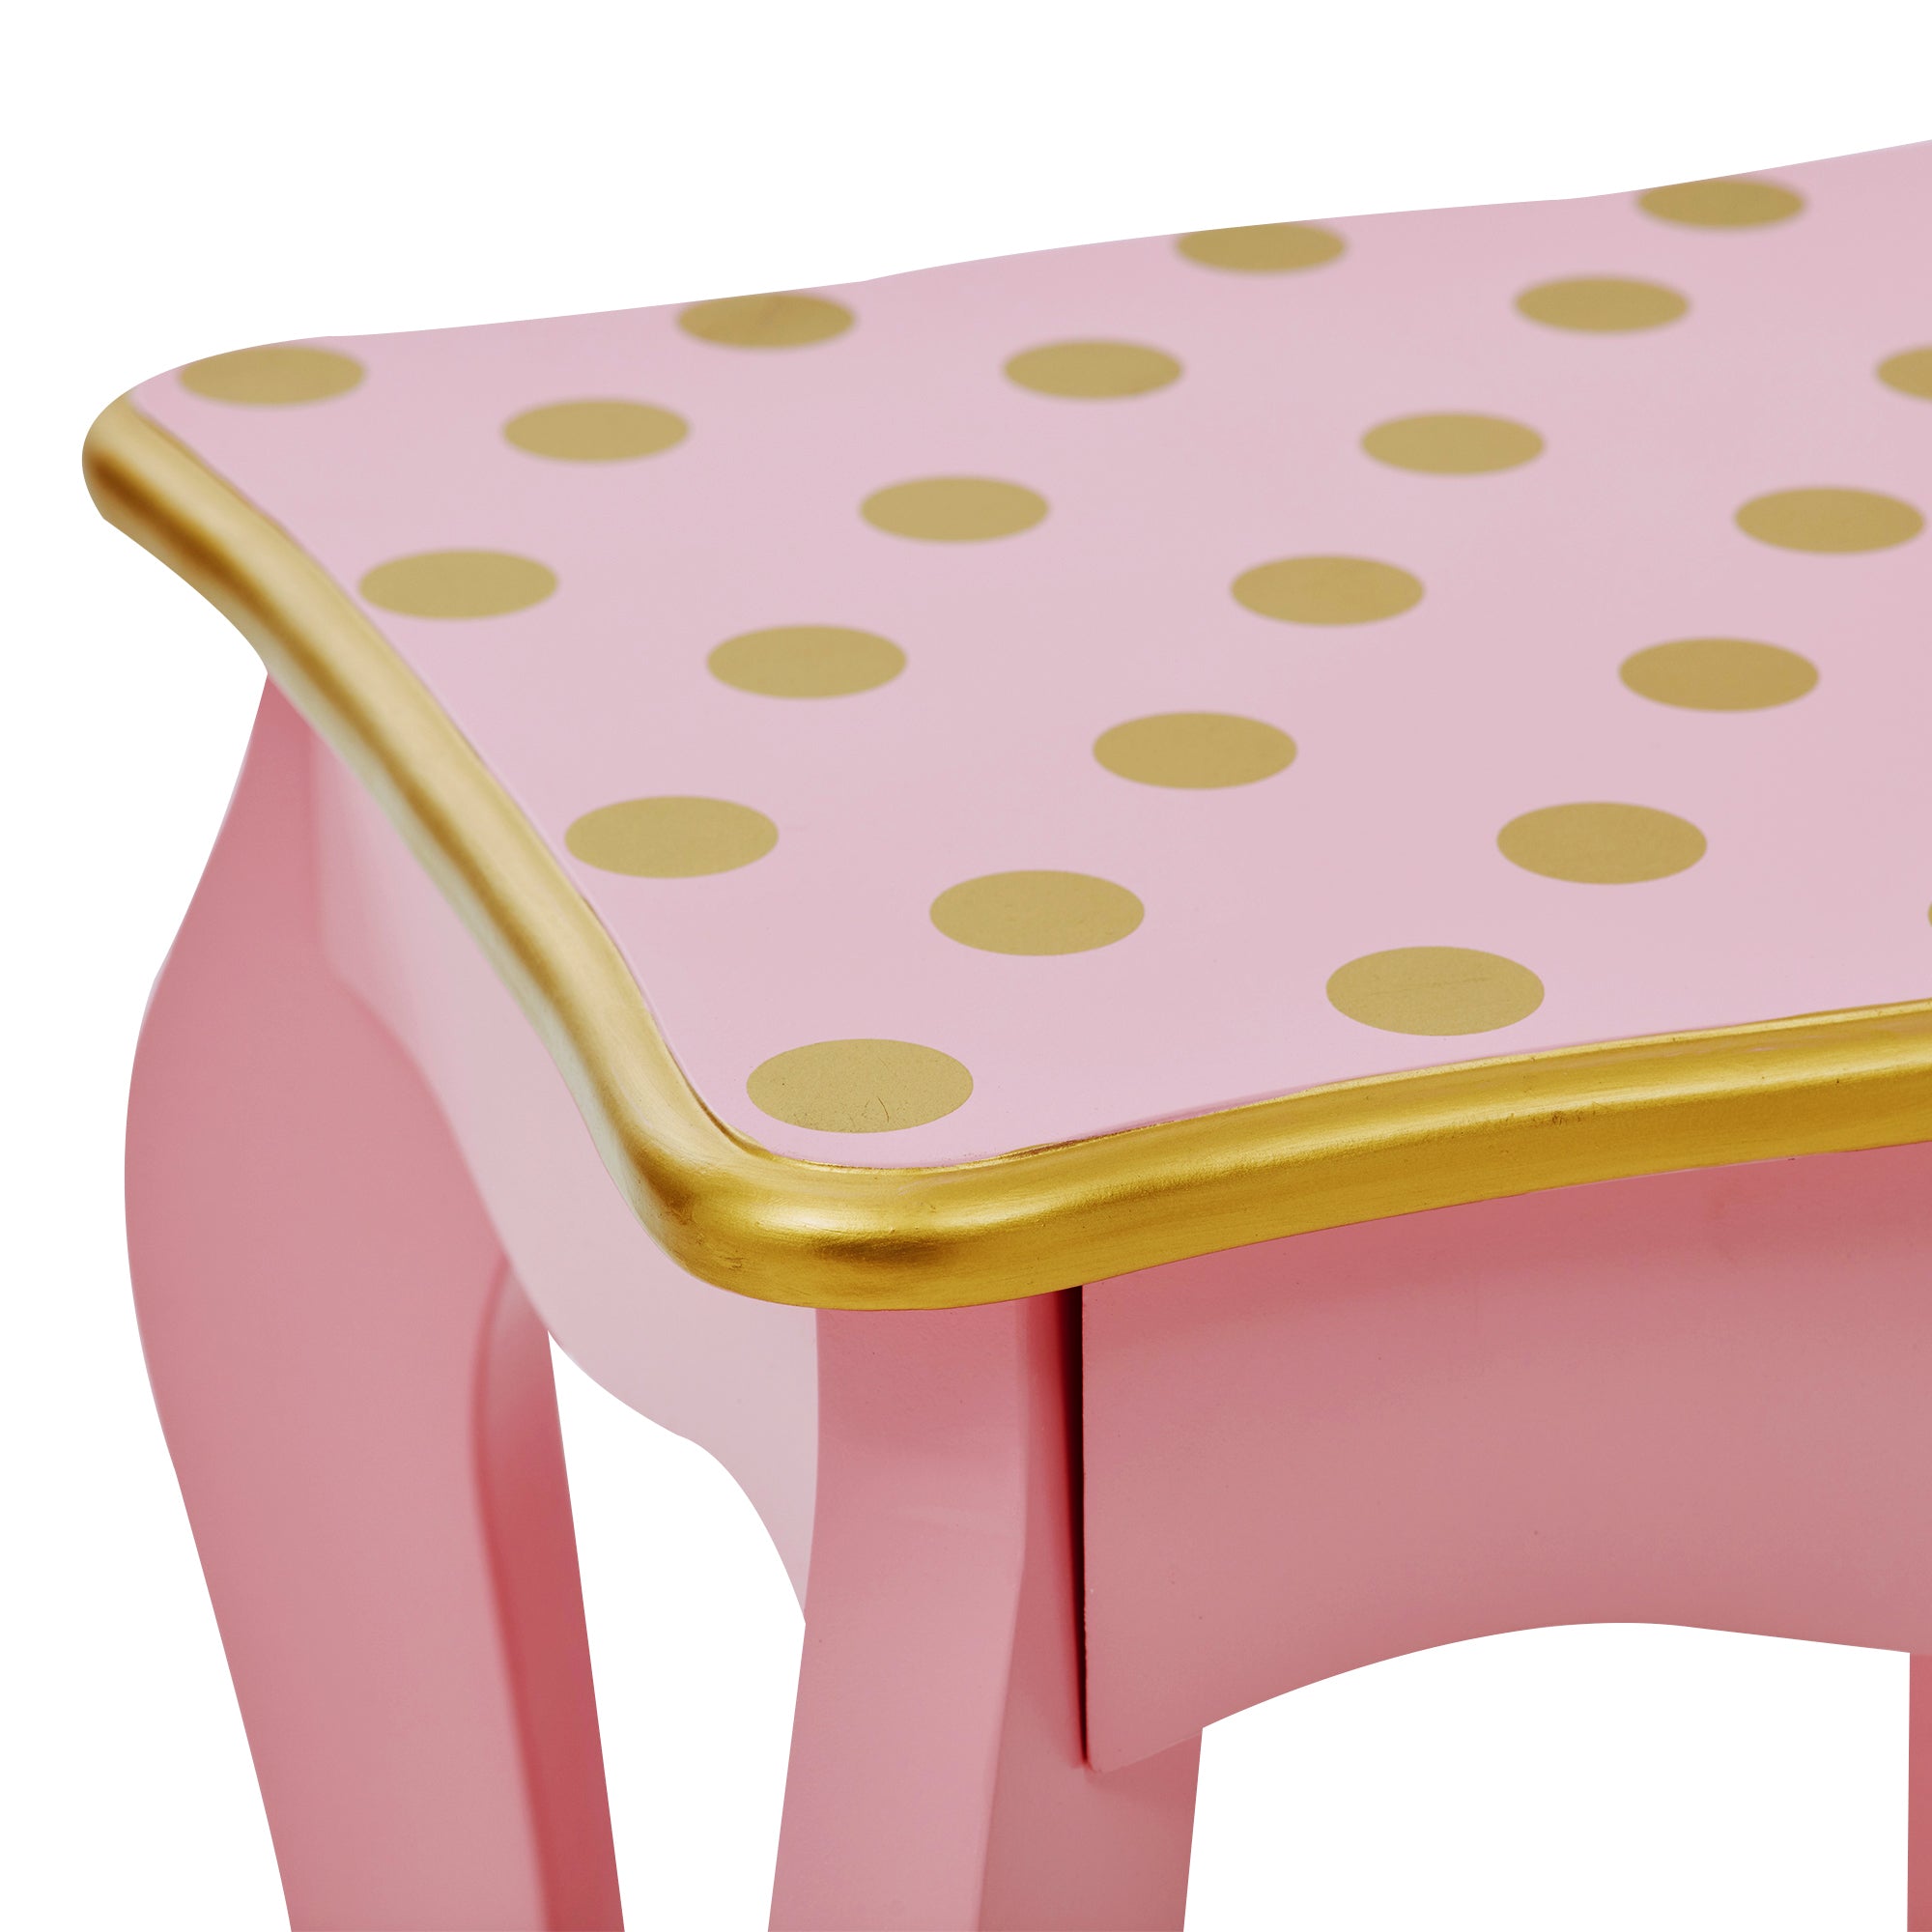 Teamson Kids Gisele 2-pc. Wooden Fashion Europe Set, Teamson – Vanity Prints Pink/Gold Polka Dot